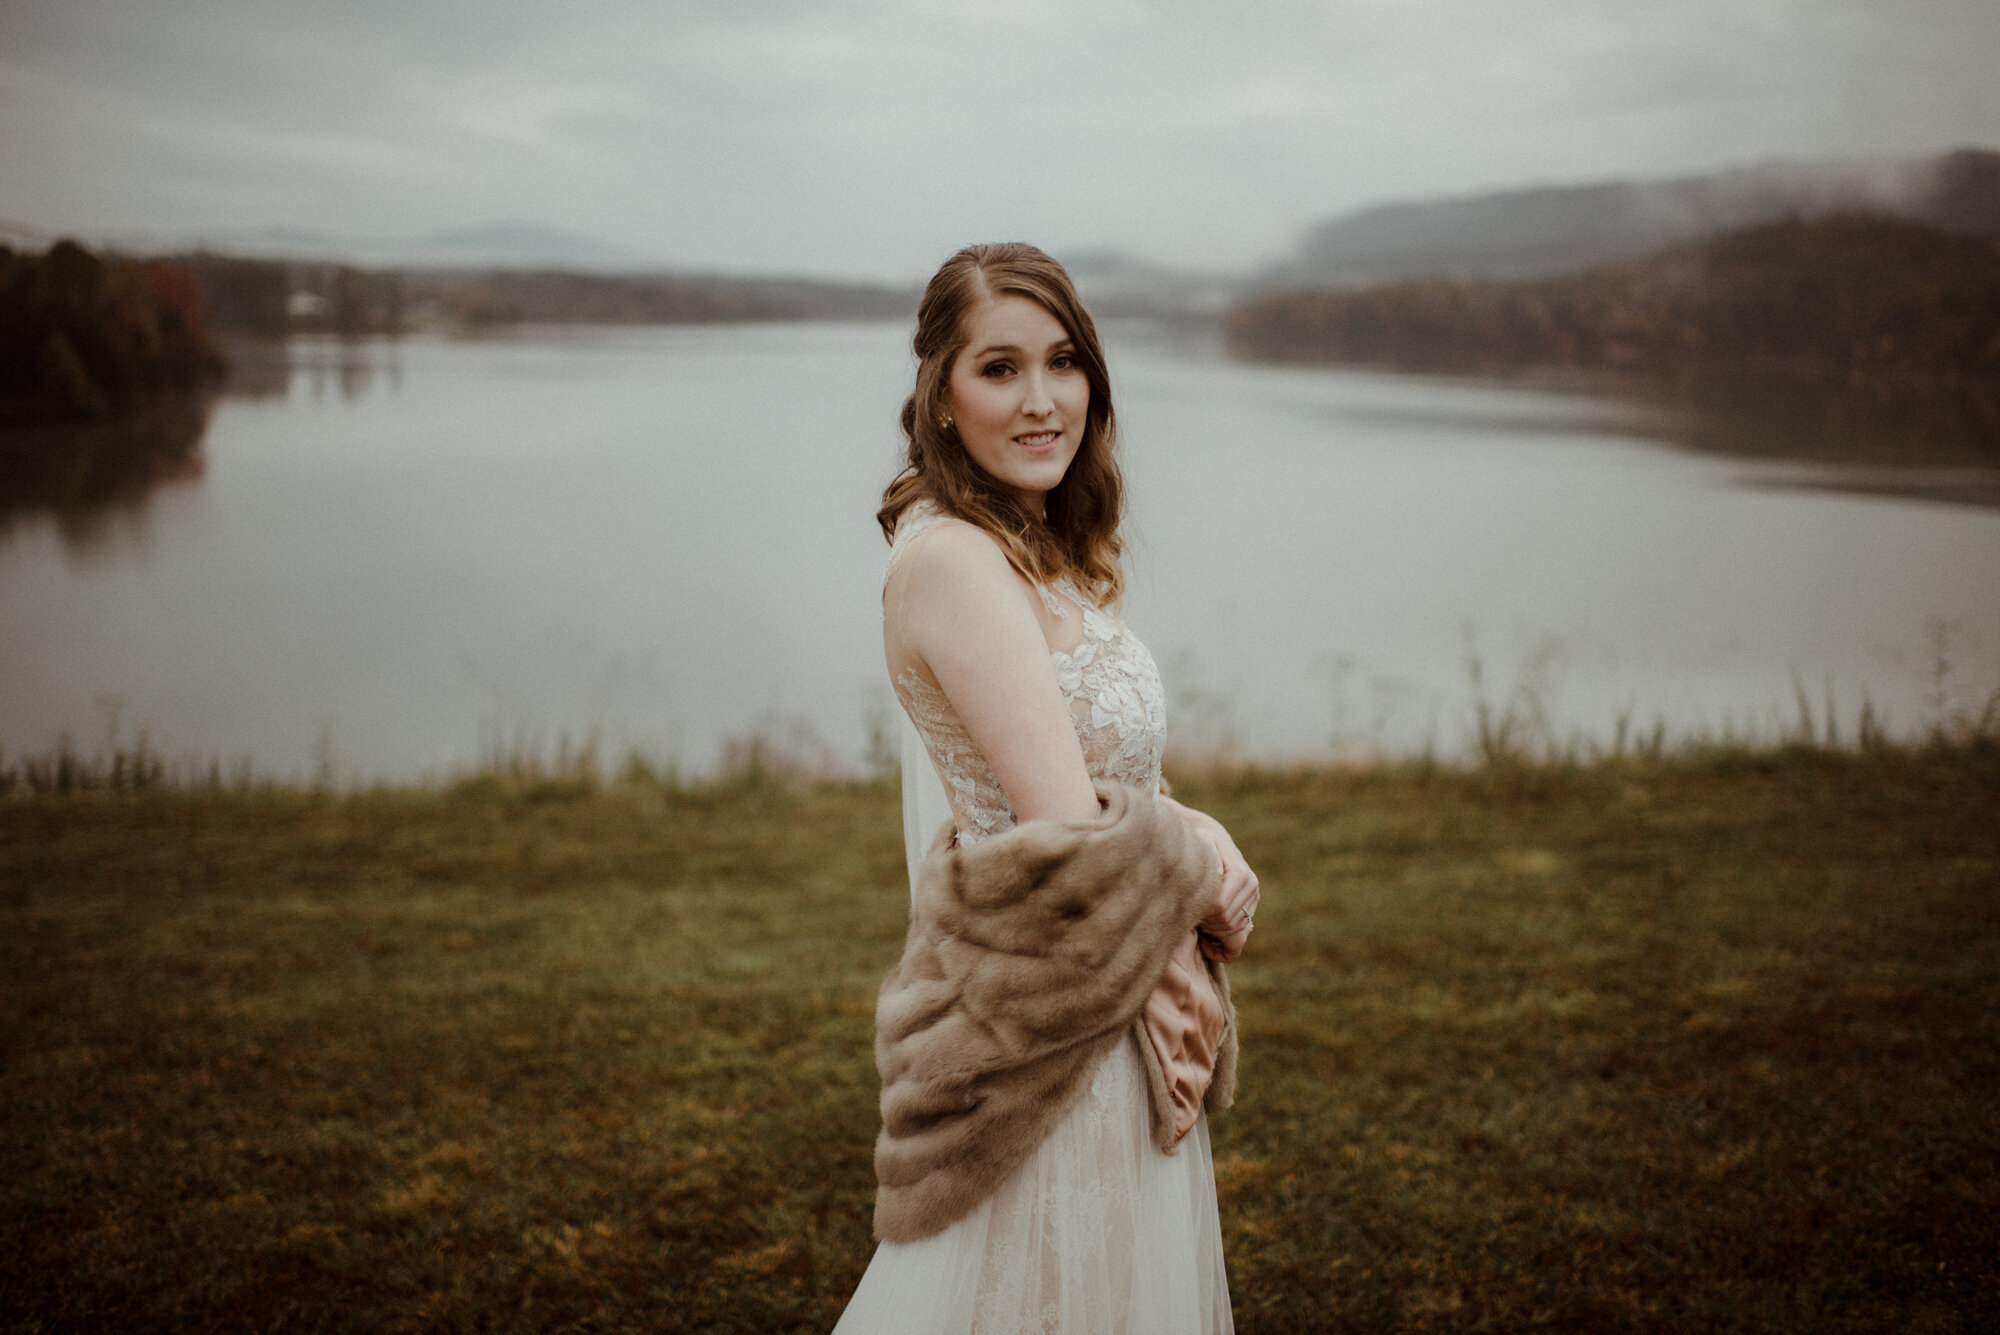 Sarah and Peyton - Rainy Autumn Wedding - Small Virginia Wedding - White Sails Creative Photography_10.jpg